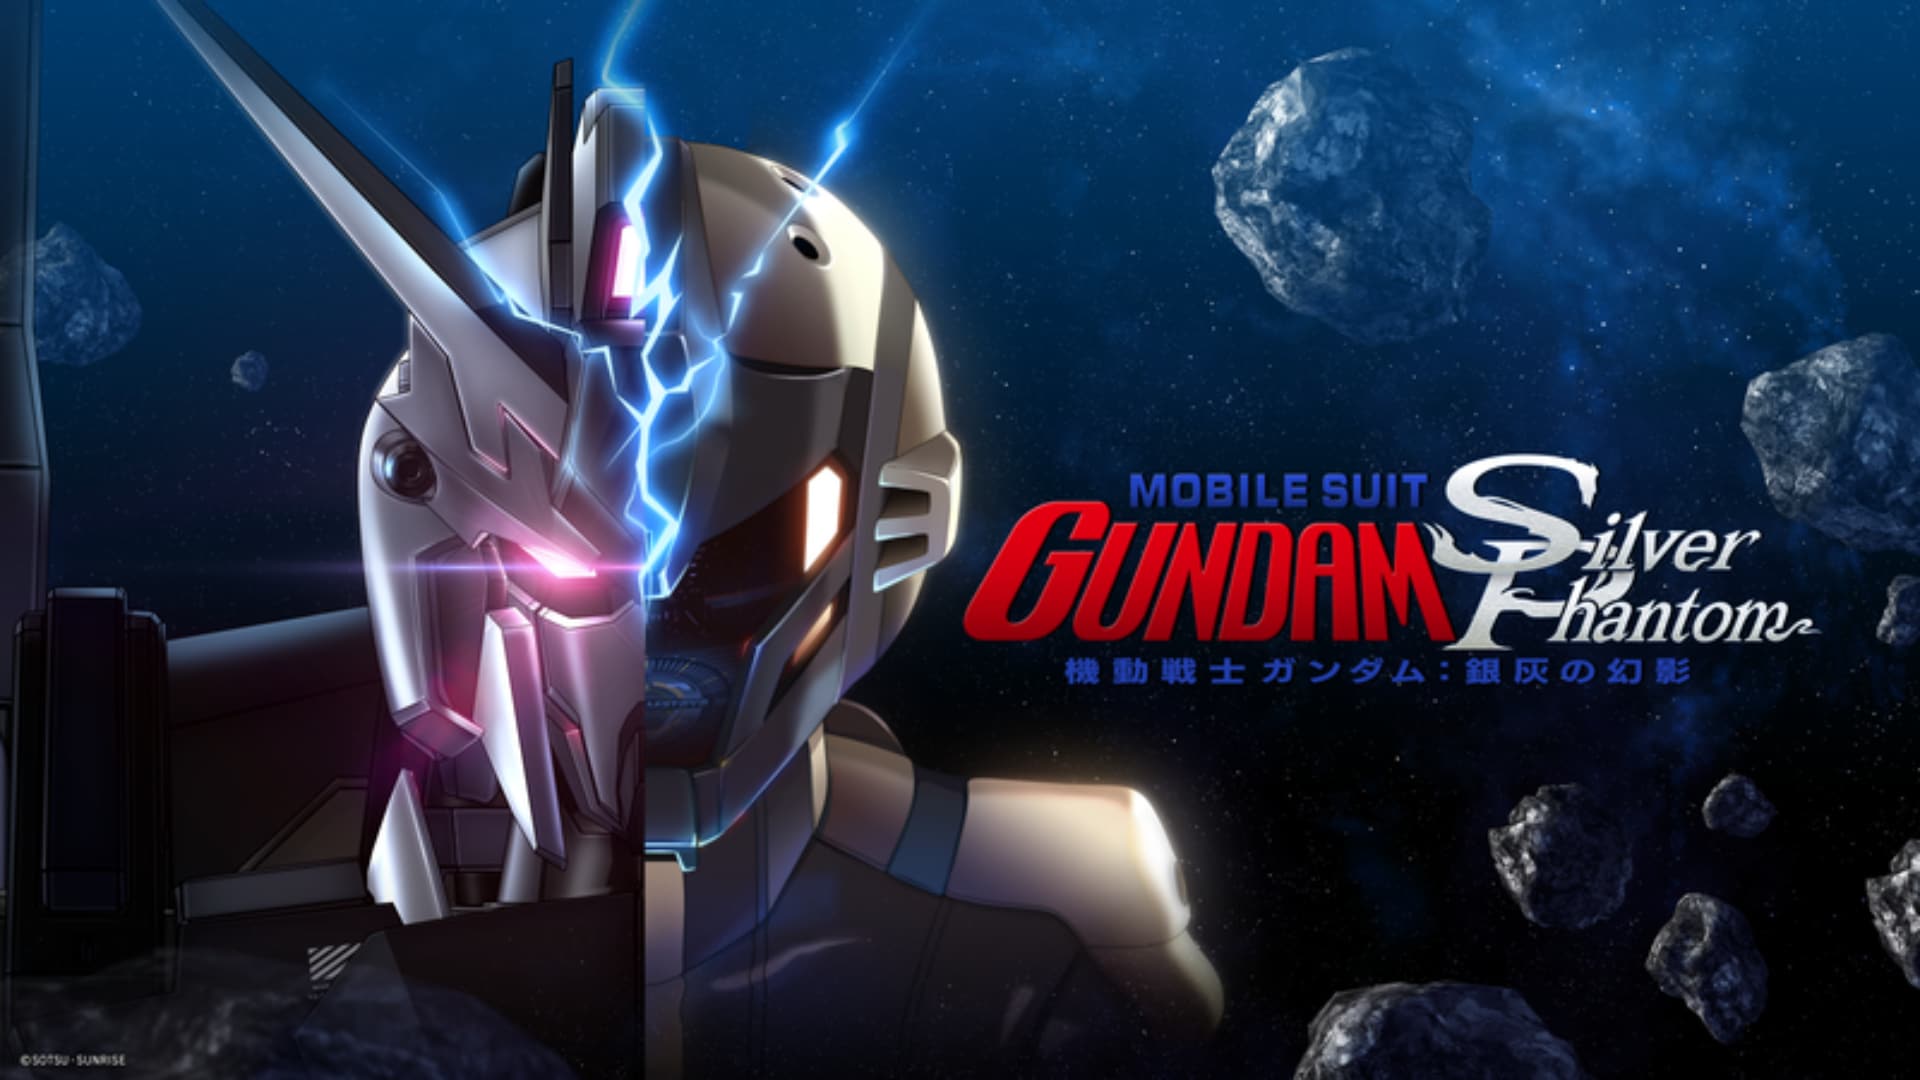 Mobile Suit Gundam Silver Phantom